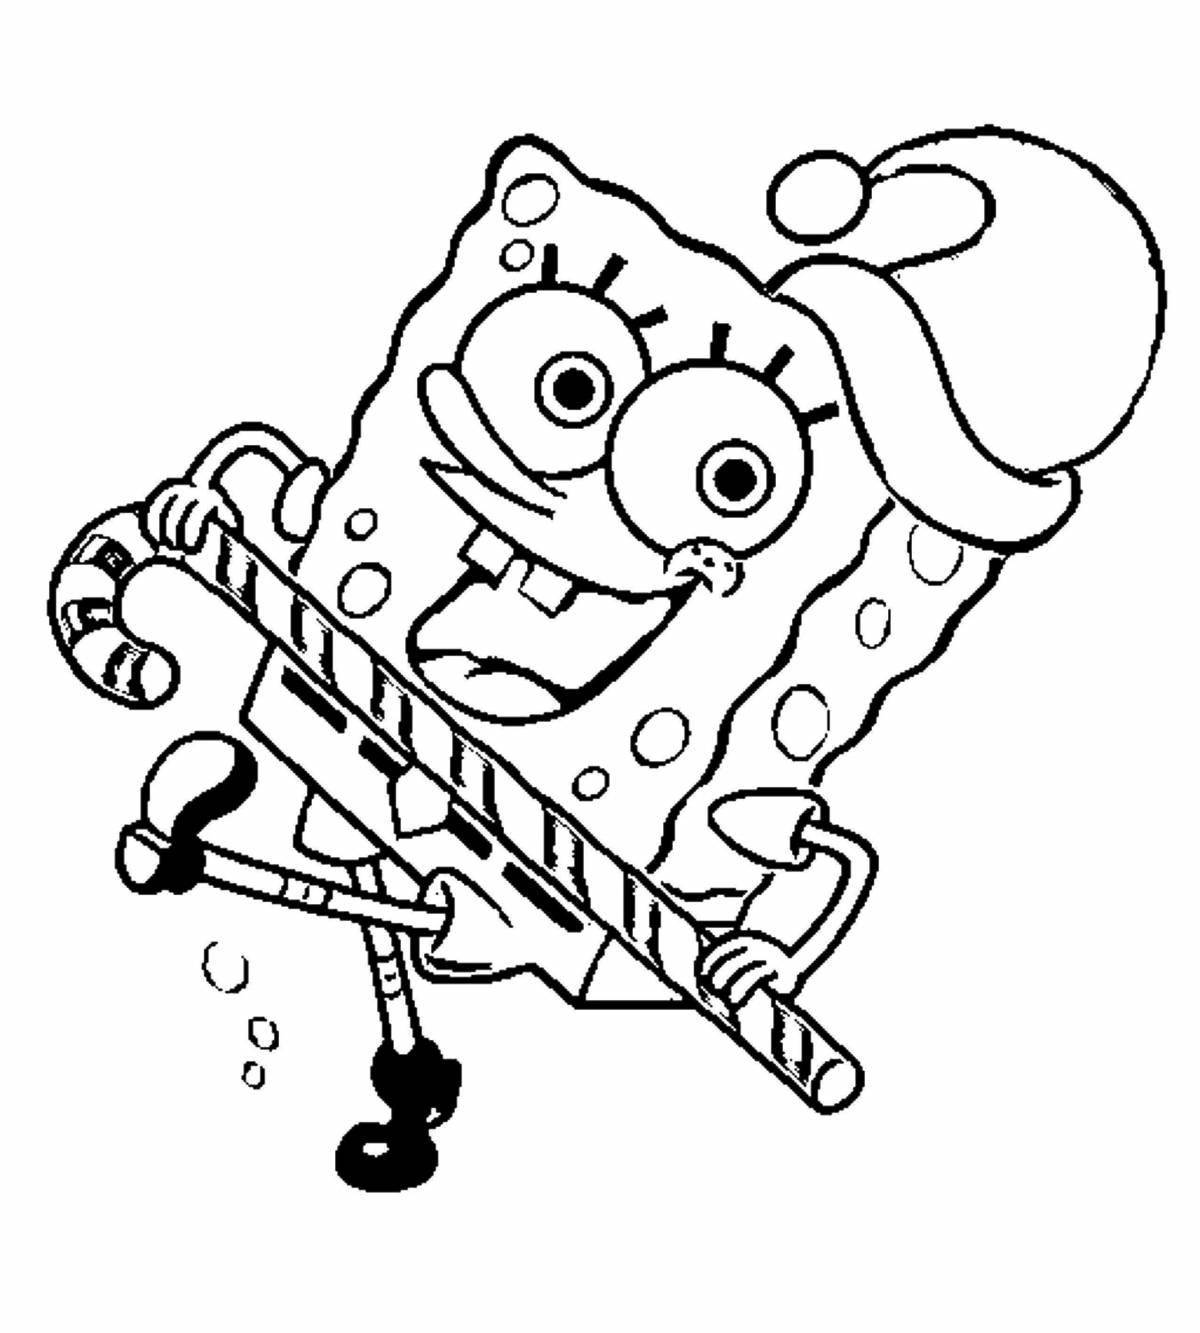 Spongebob coloring book for girls